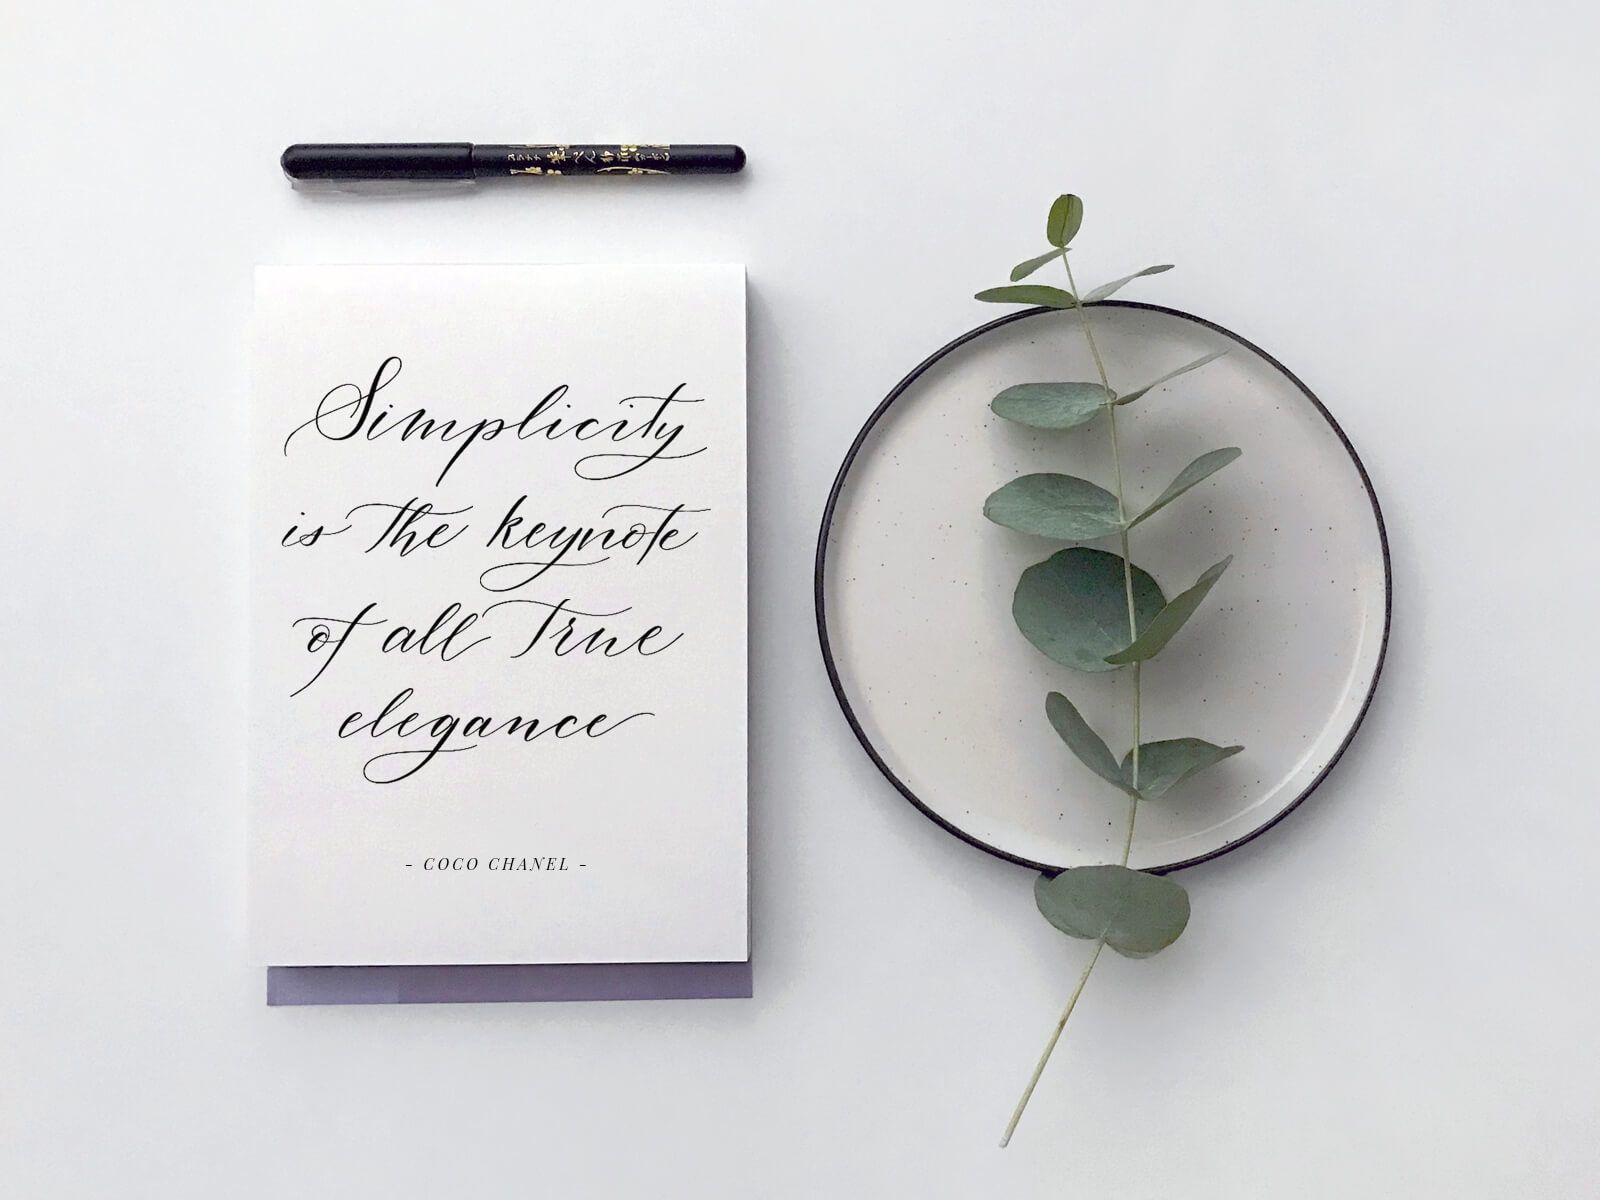 Zitat von Coco Chanel: Simplicity is the keynote of all true elegance